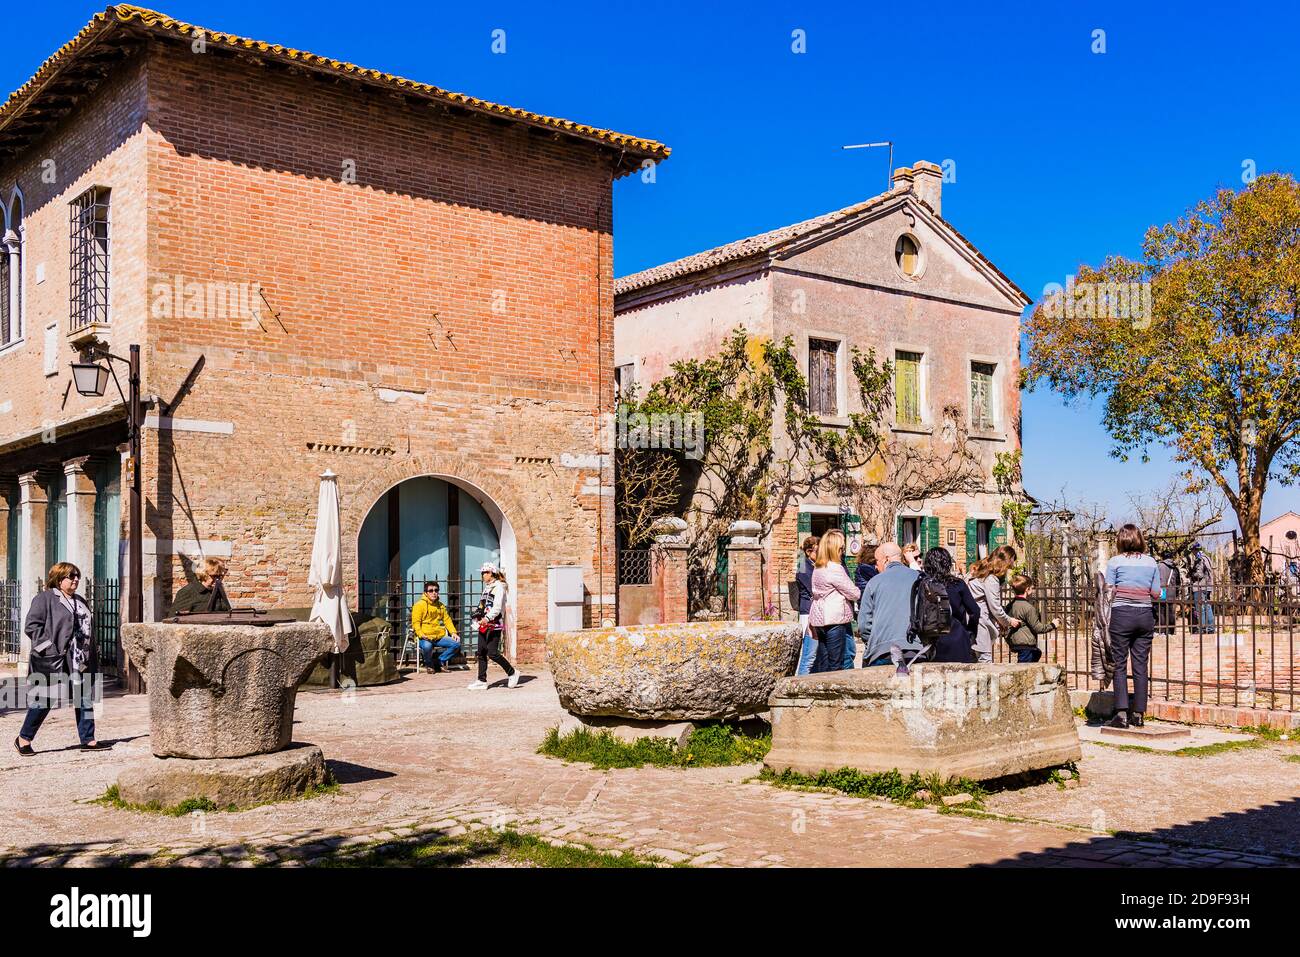 Tourists walking through the main square. Torcello, Venetian Lagoon, Venice, Veneto, Italy, Europe Stock Photo